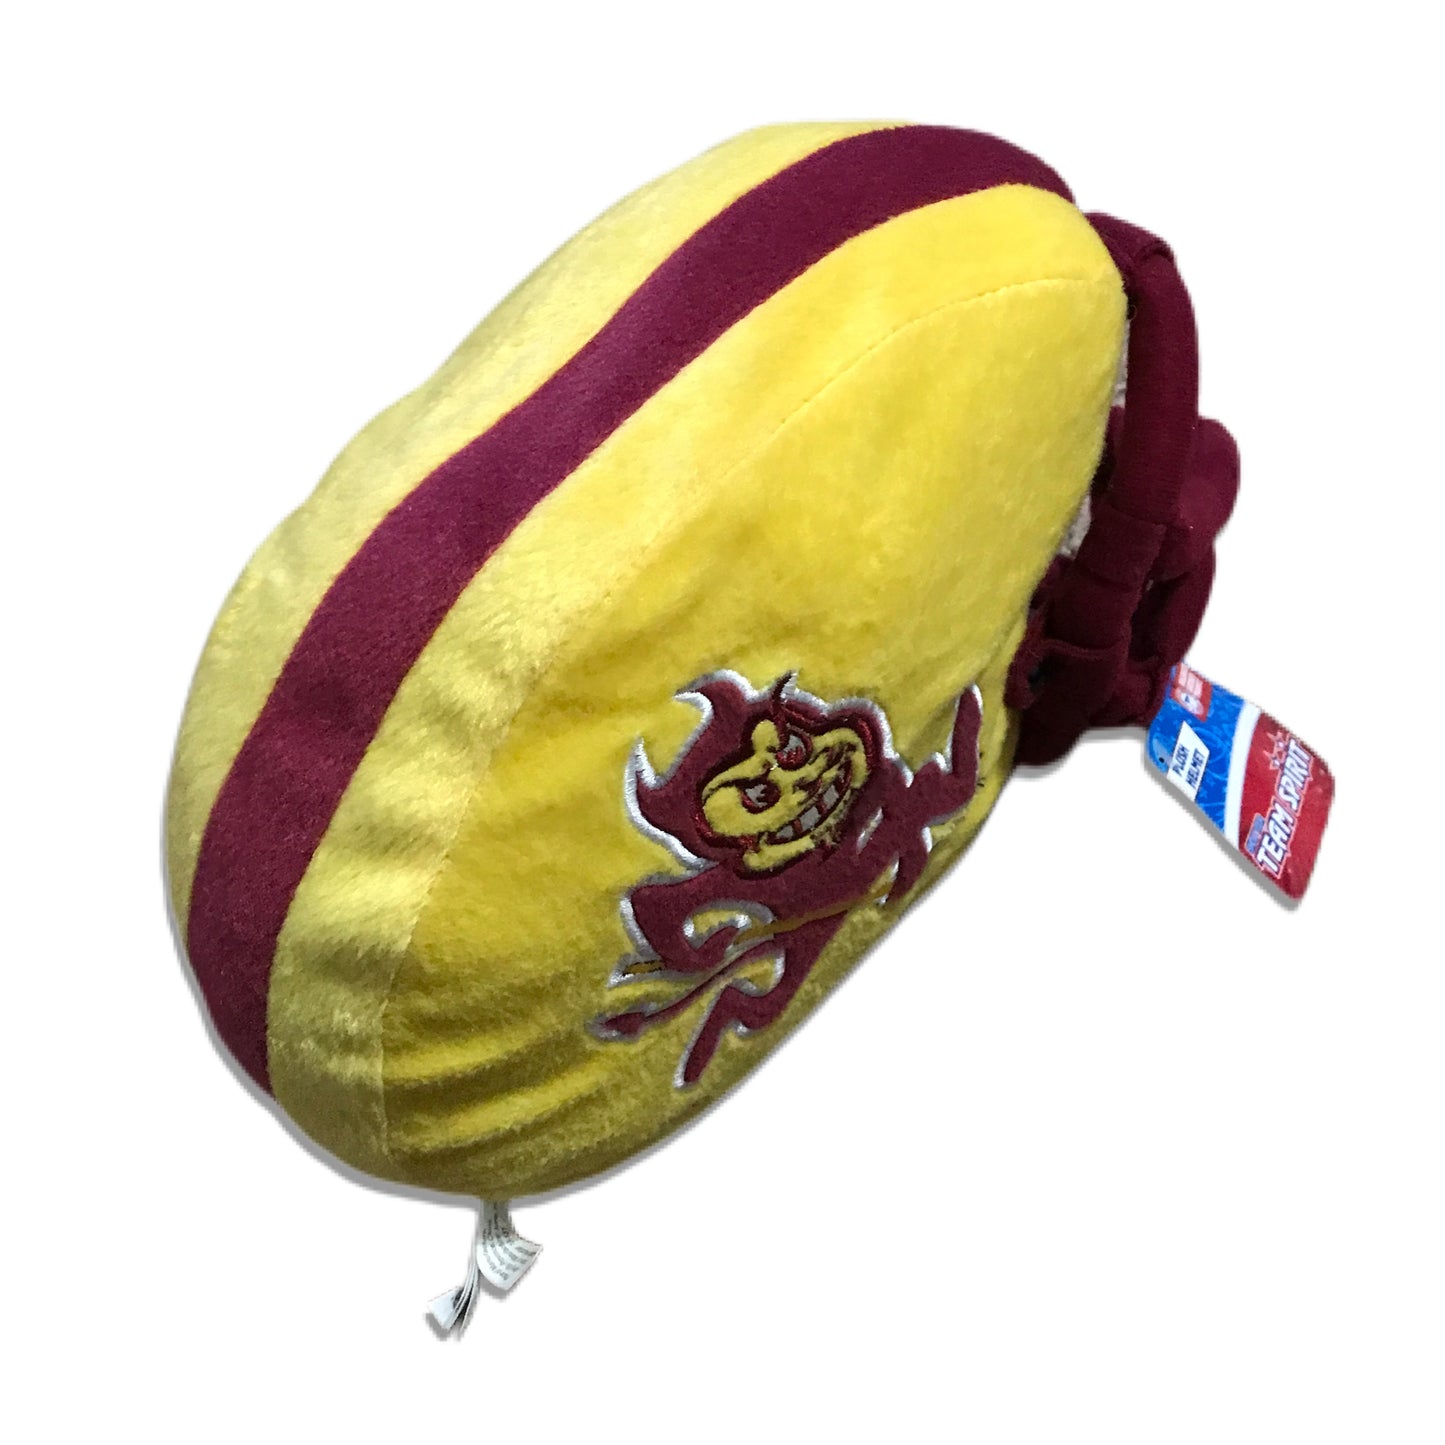 Arizona State Football Helmet Pillow